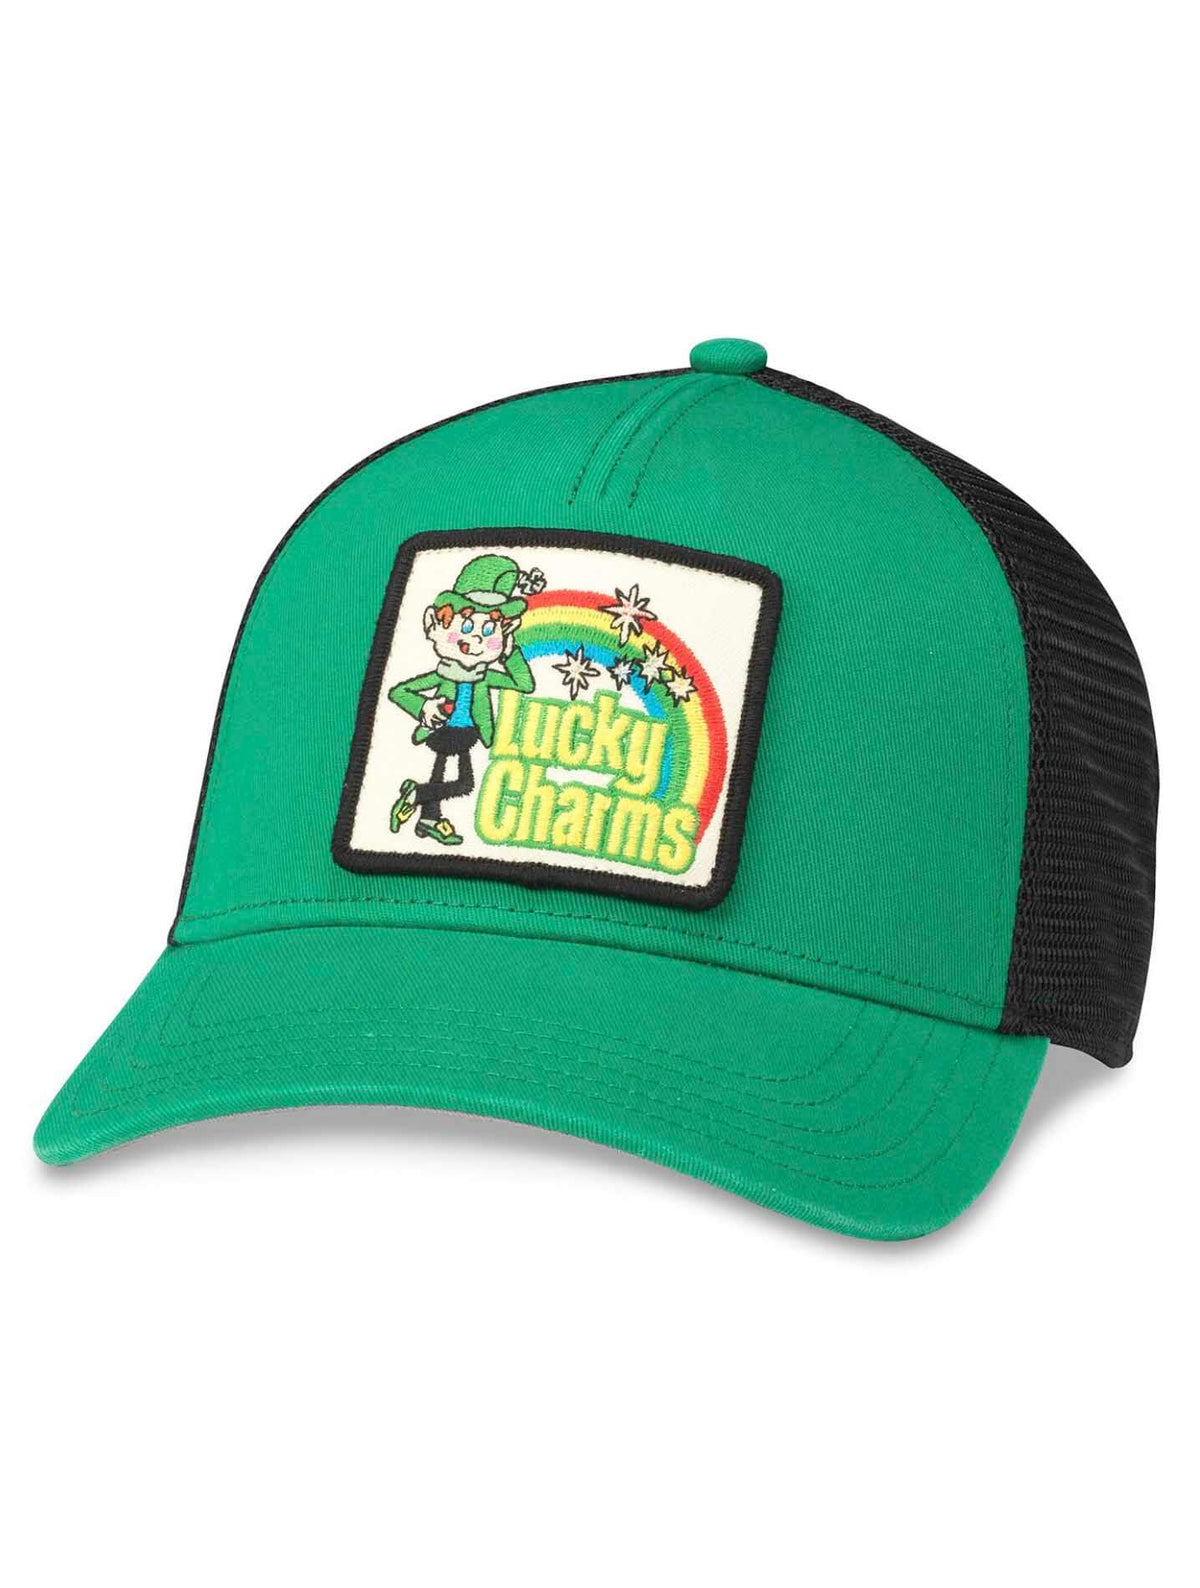 Lucky Charms Trucker Hat in Black/Kelly